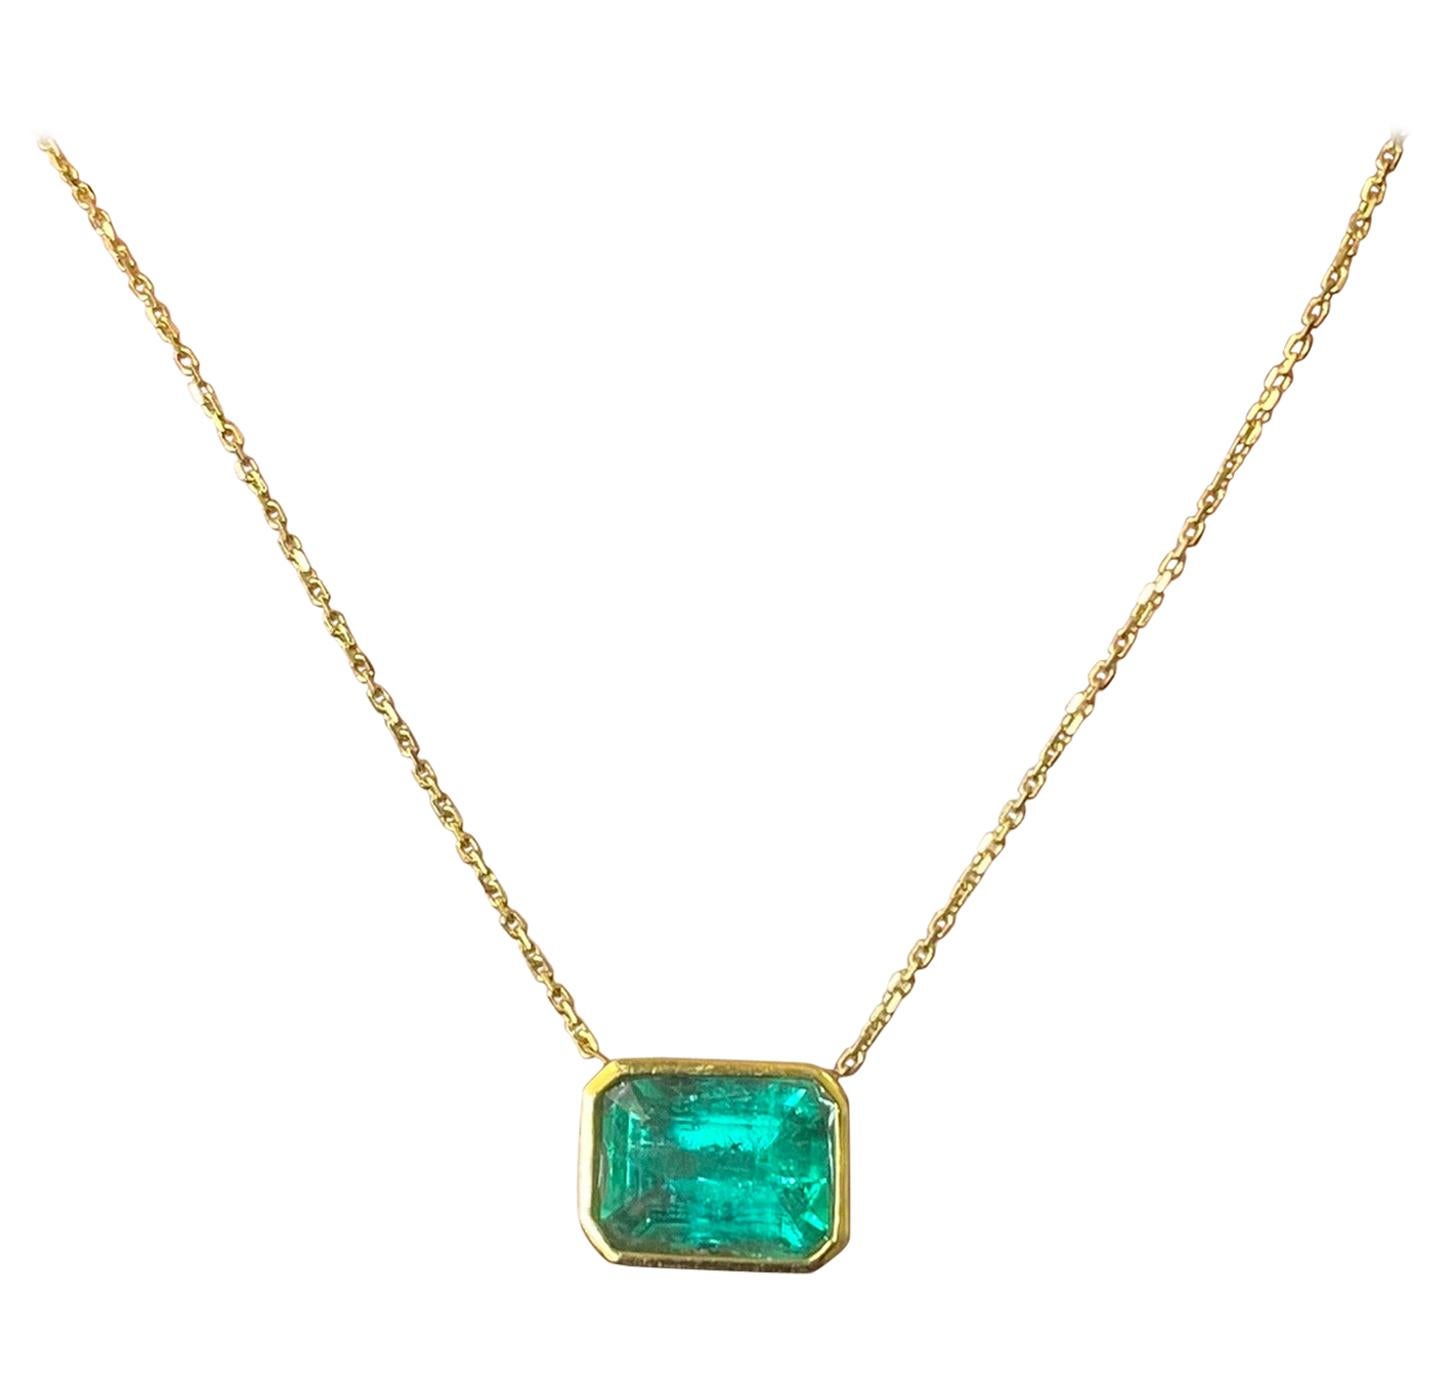 Certified 1.37 Carat Emerald Cut Colombian Emerald Pendant Chain Necklace